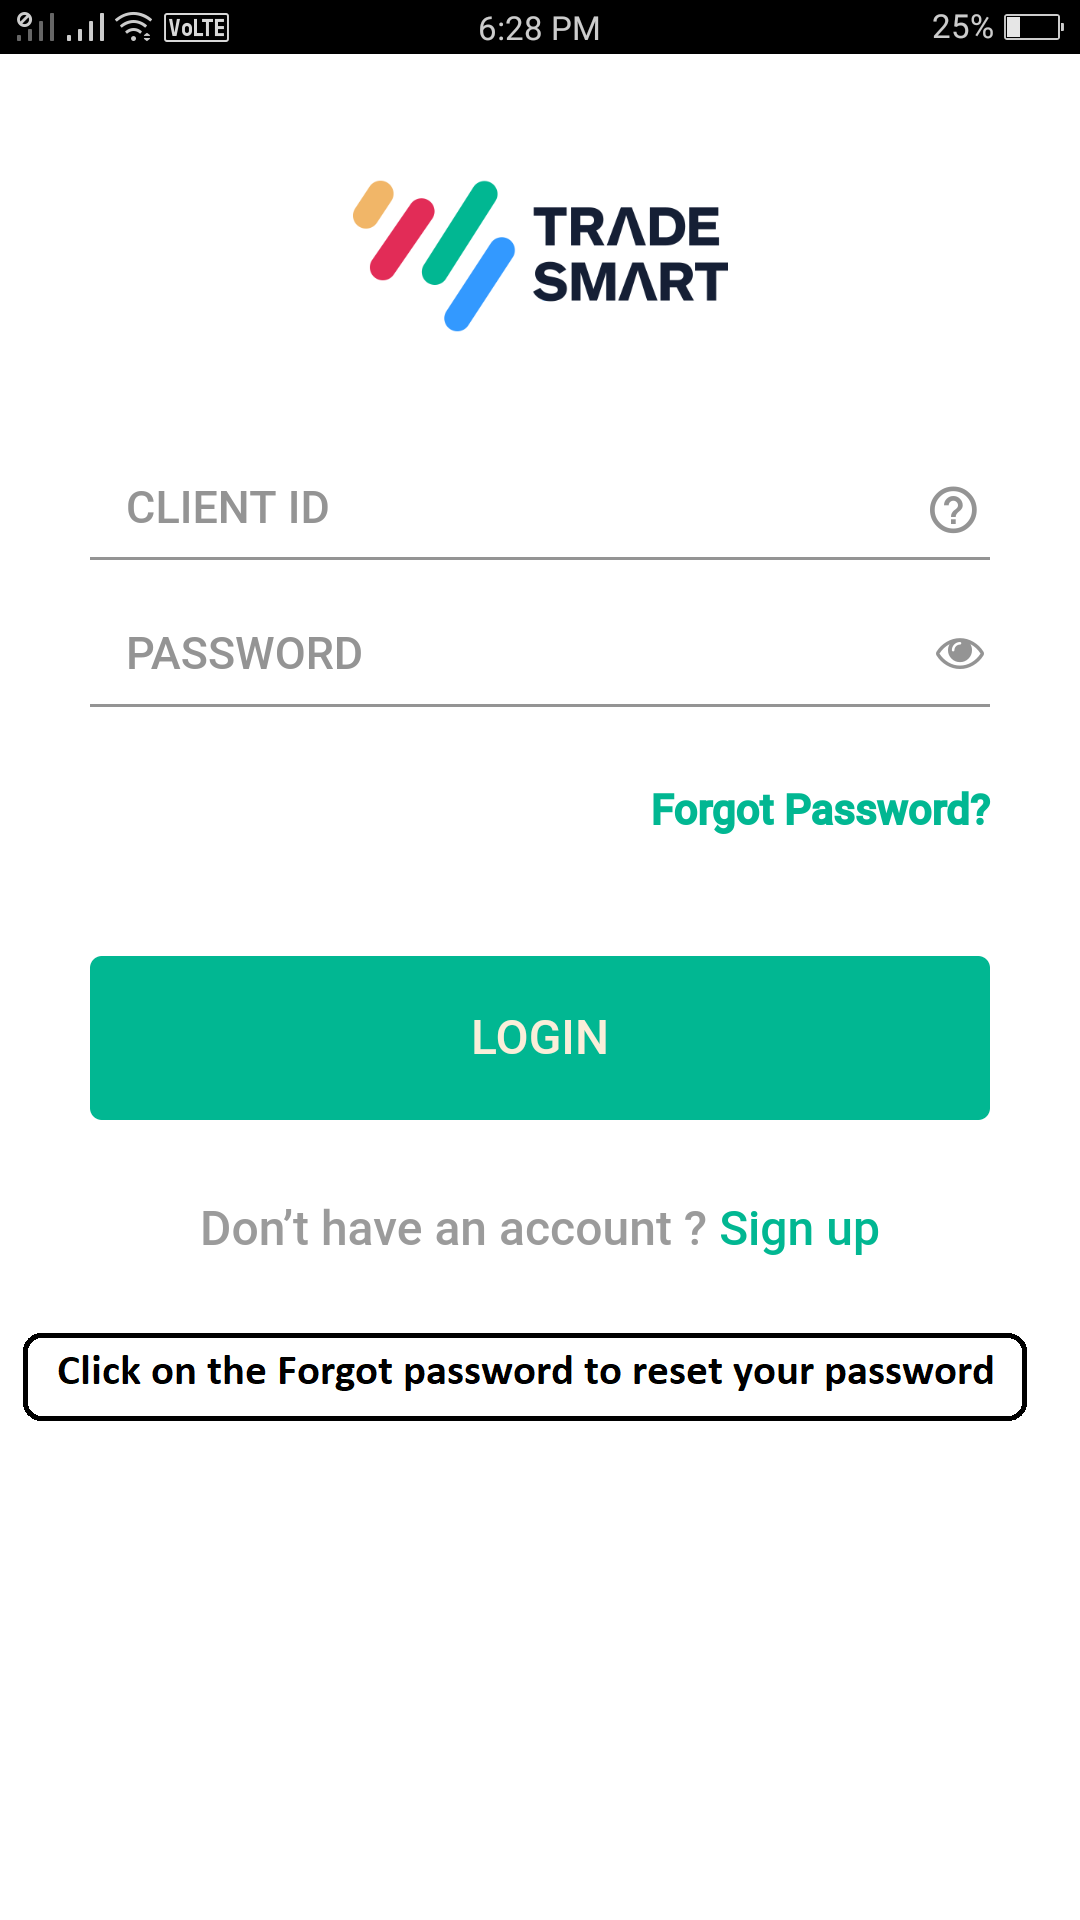 Swing forgot password